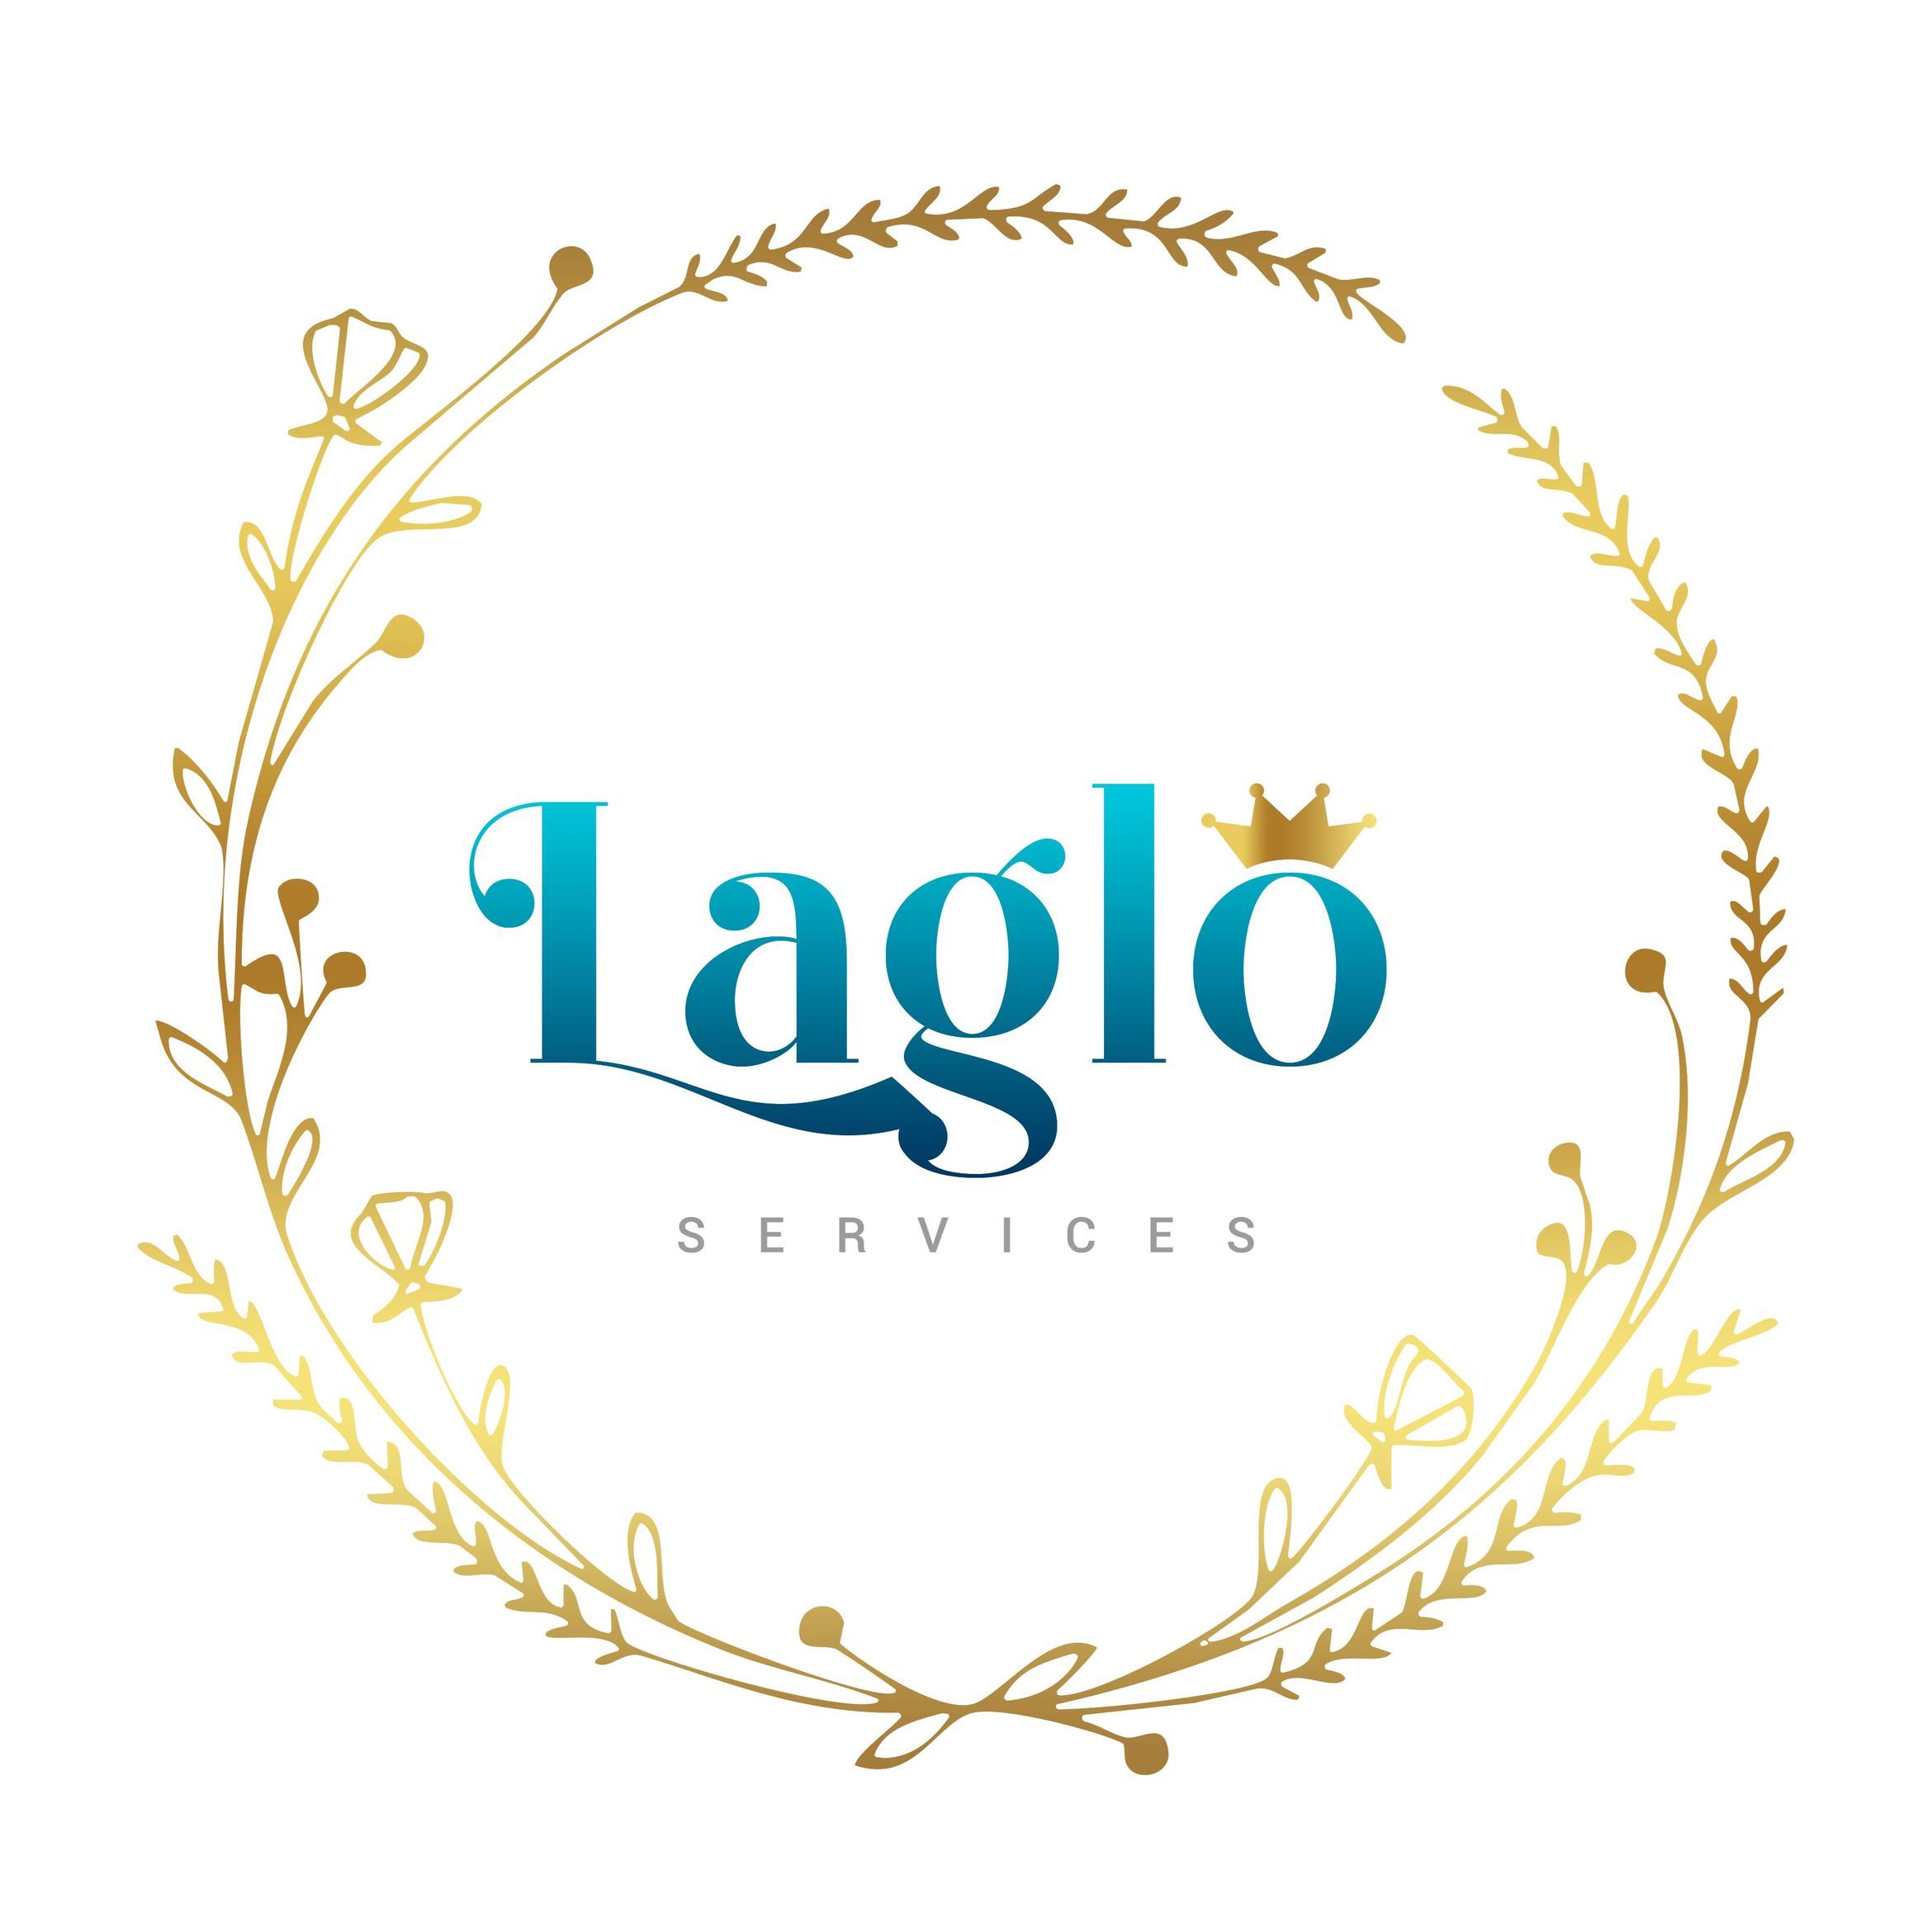 LaGlo Services, 6400 NW Expressway St, Oklahoma City, 73132